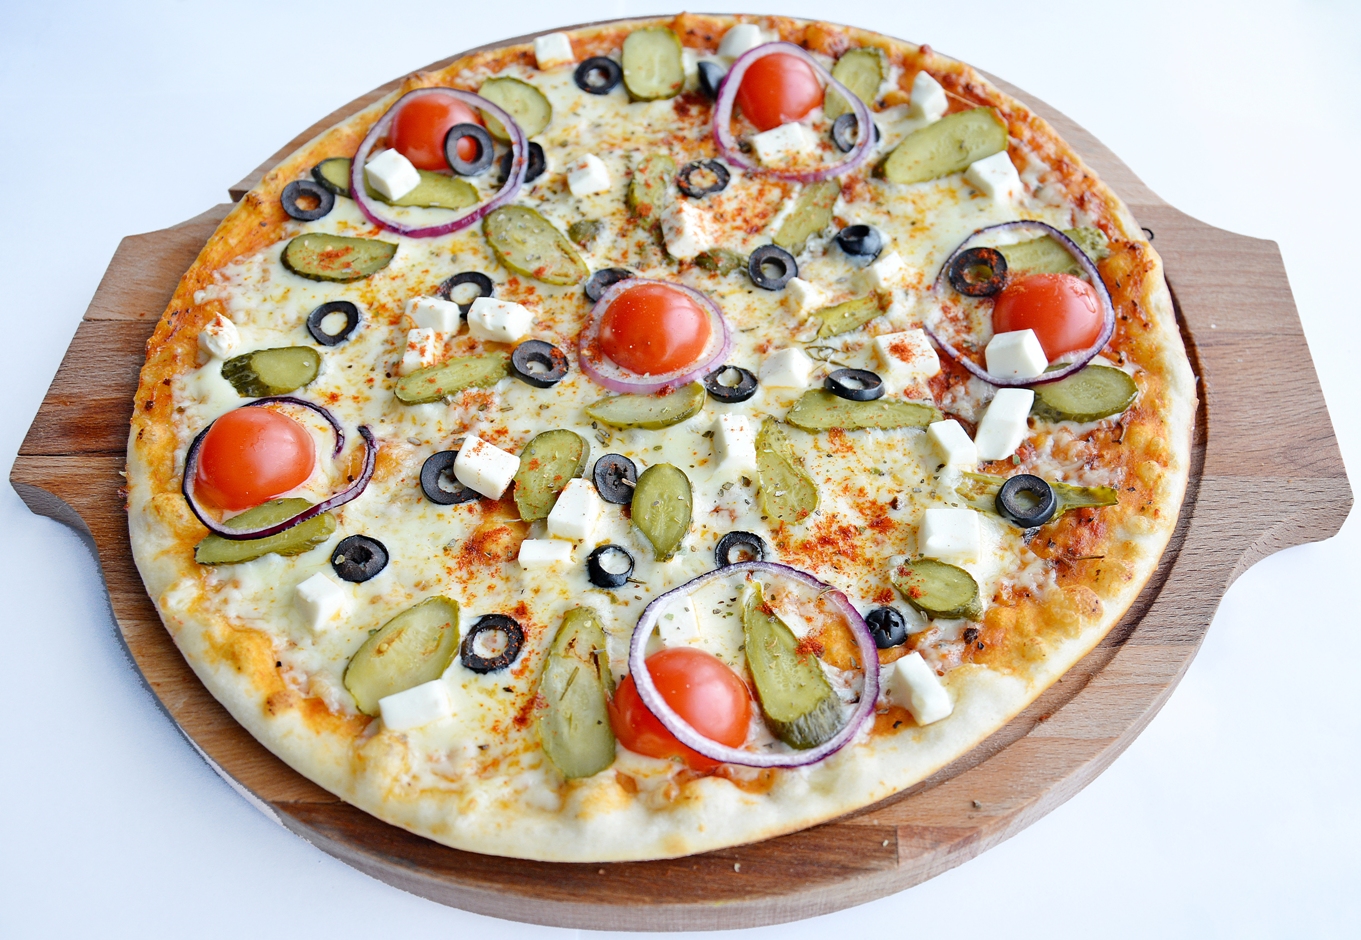 юлия высоцкая рецепты пицца фото 99